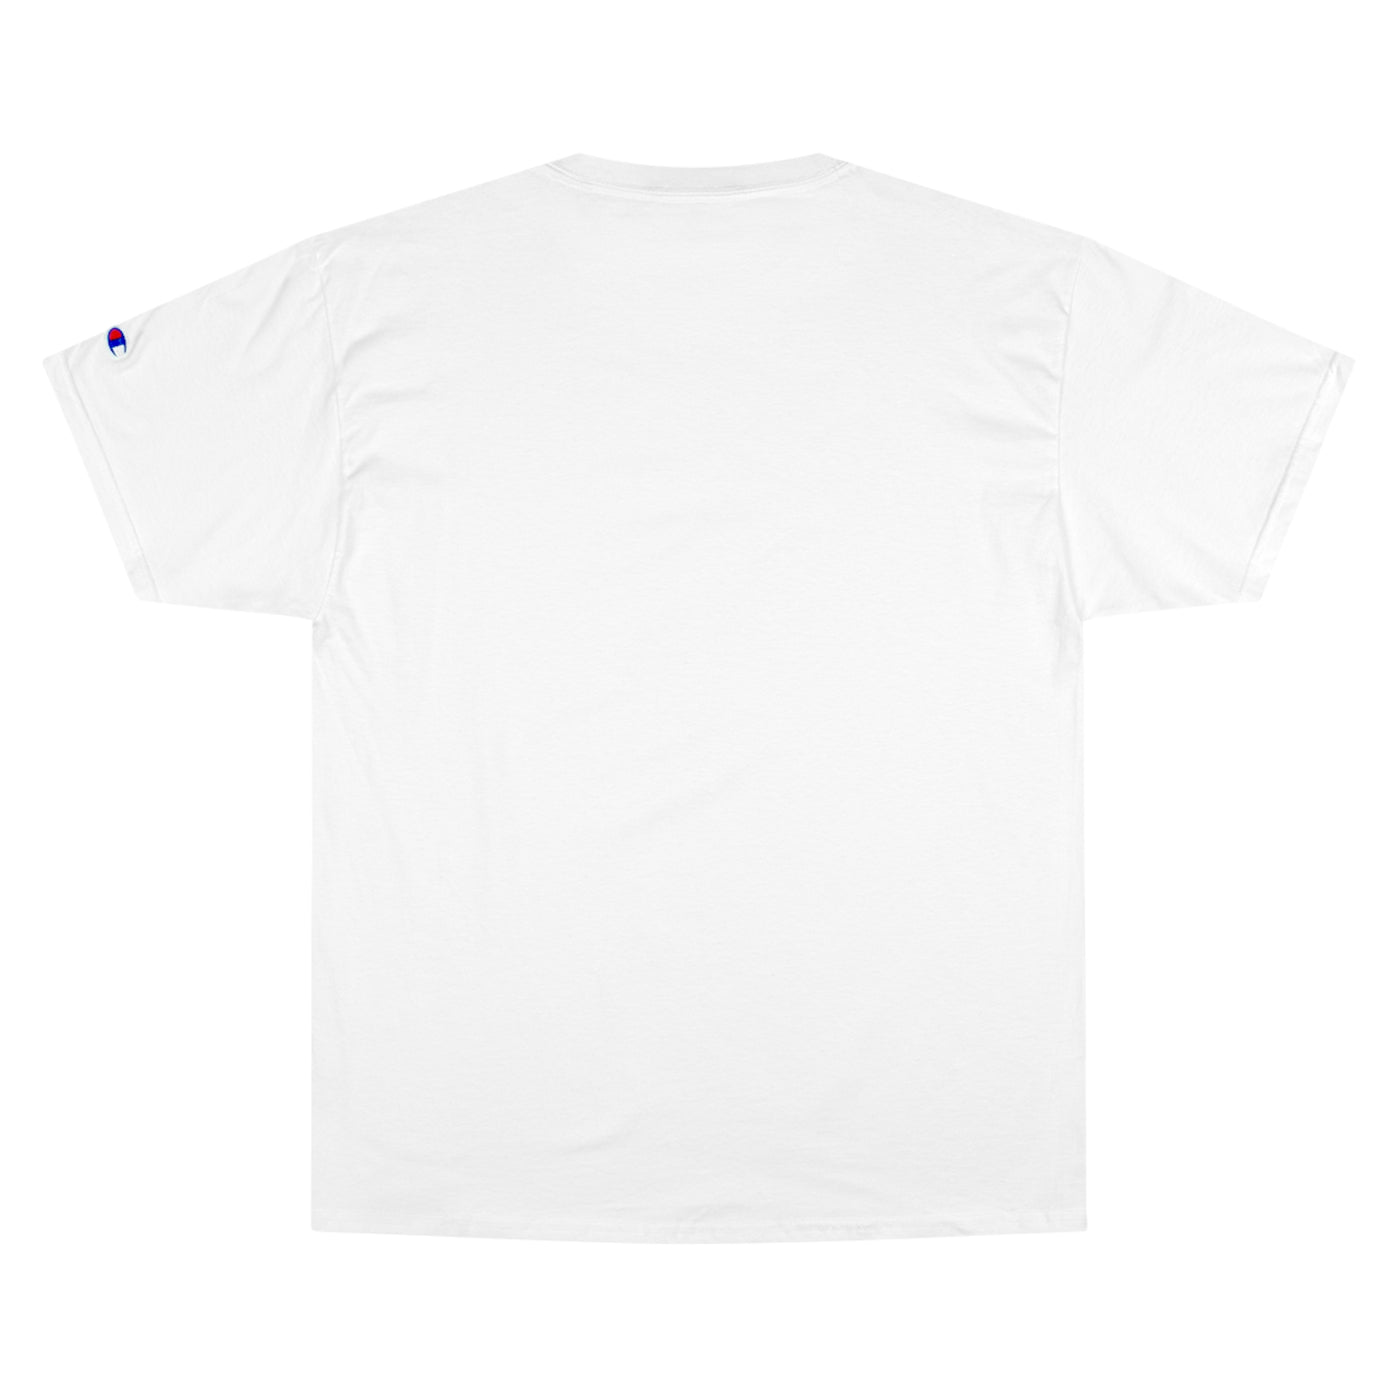 Fishing Planet M`Benga Champion T-Shirt